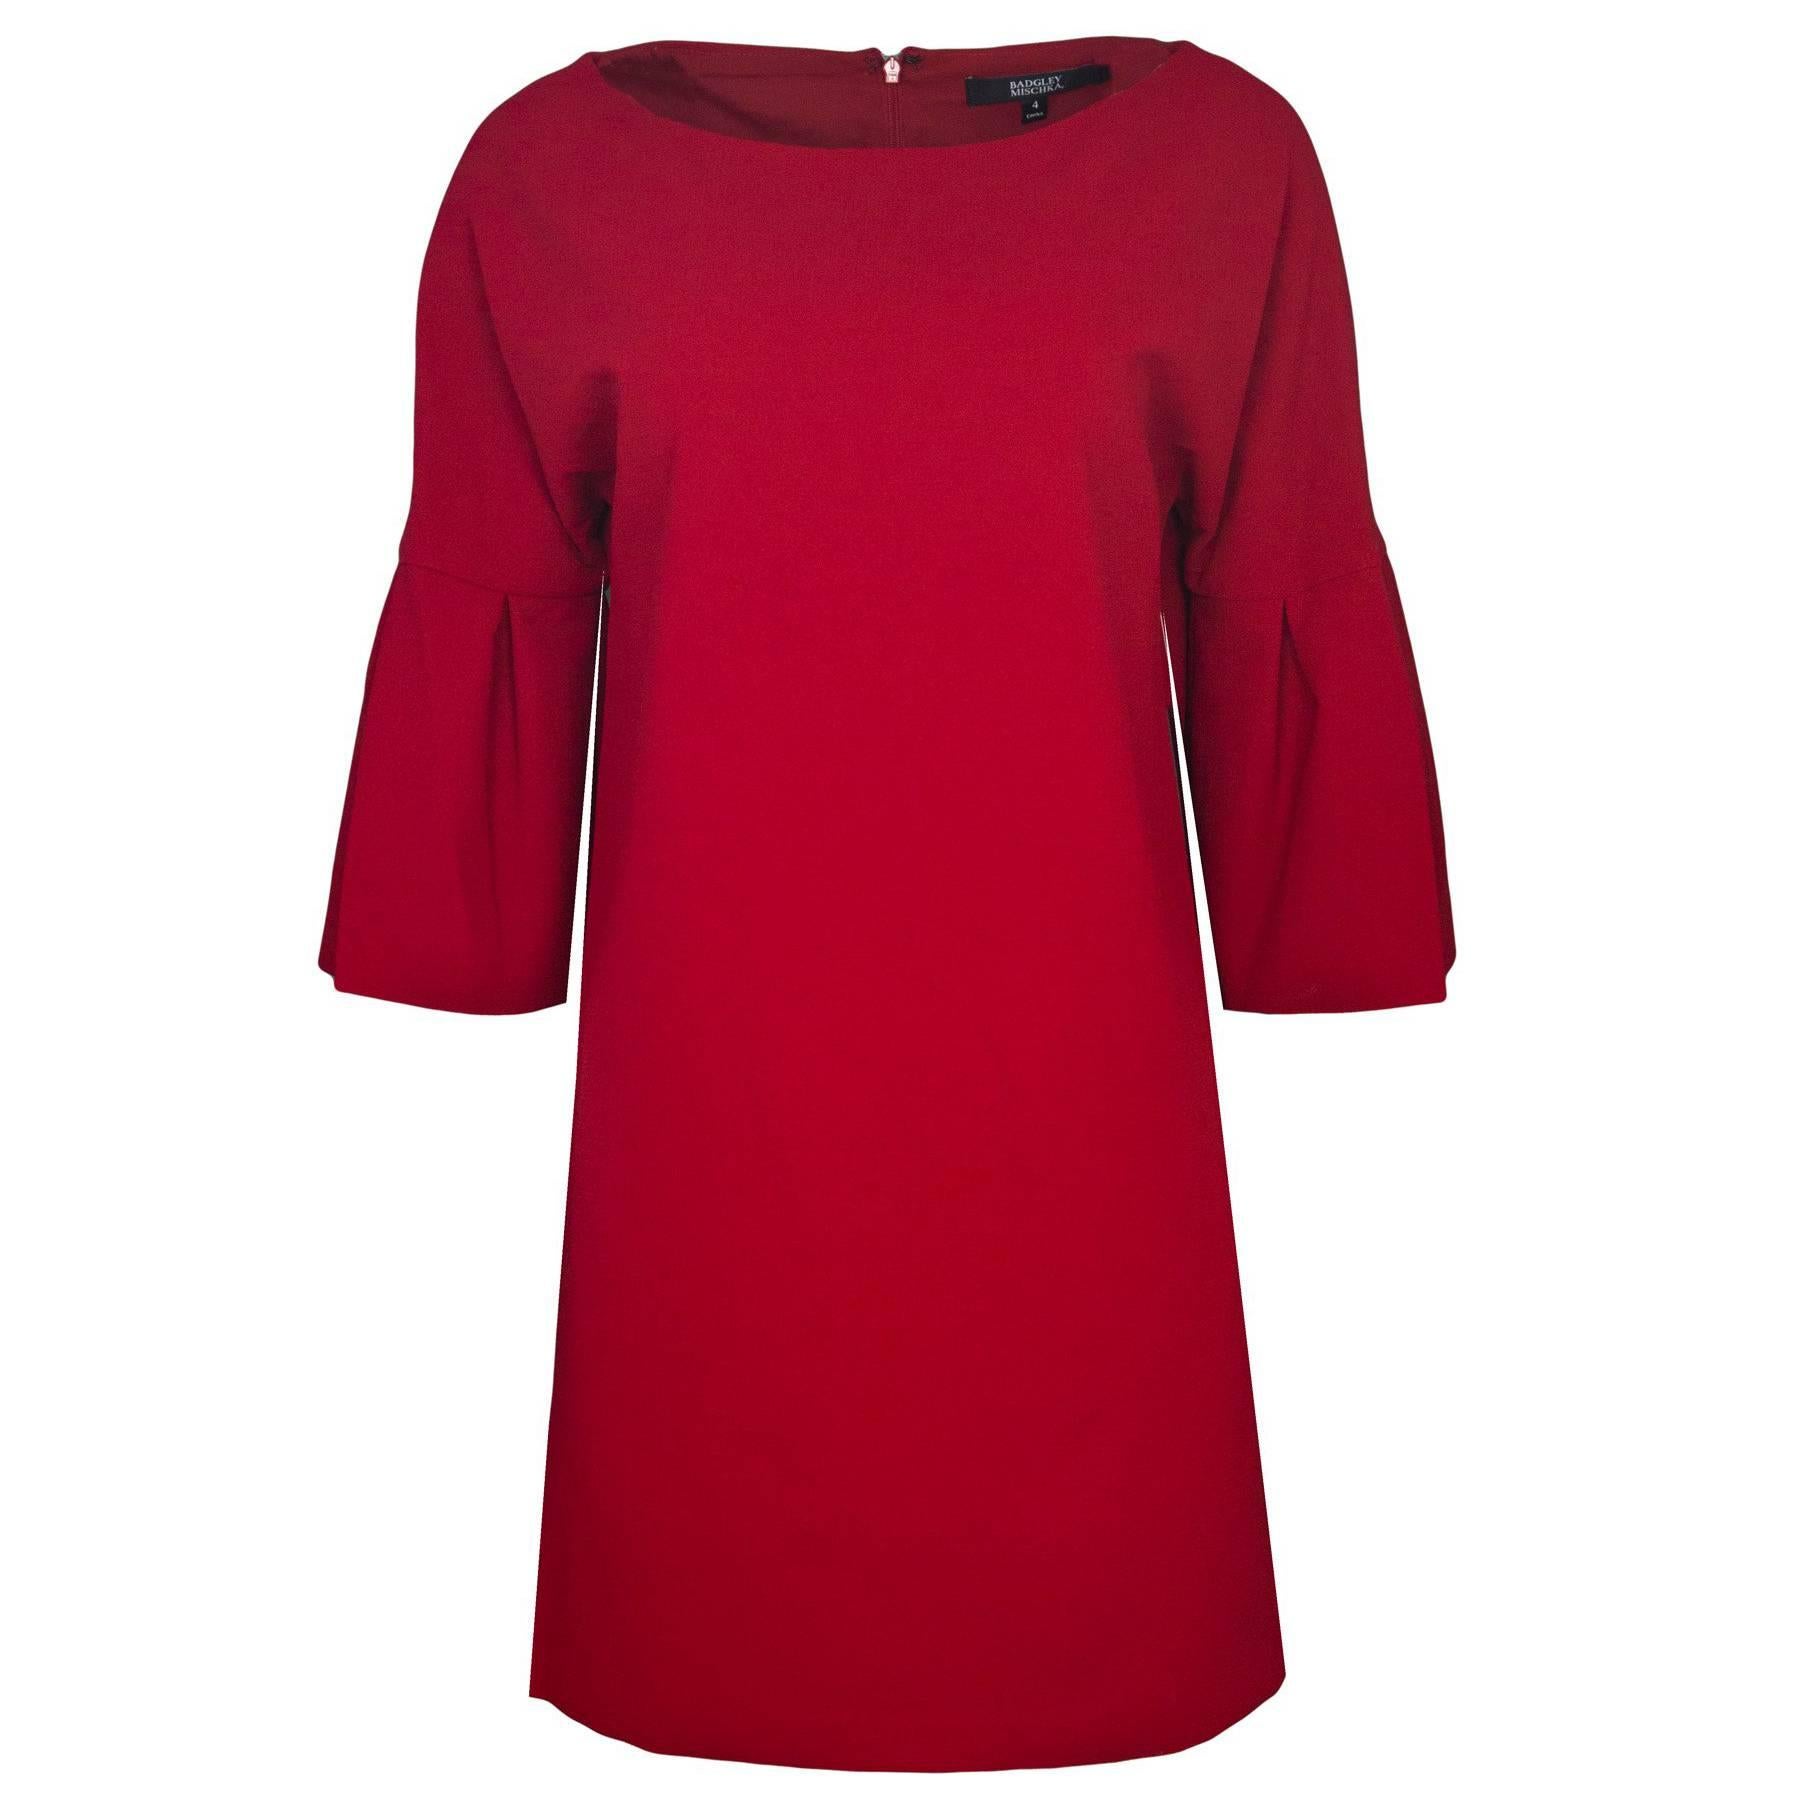 Badgley Mischka Red Sheath Dress Sz 4 NWT